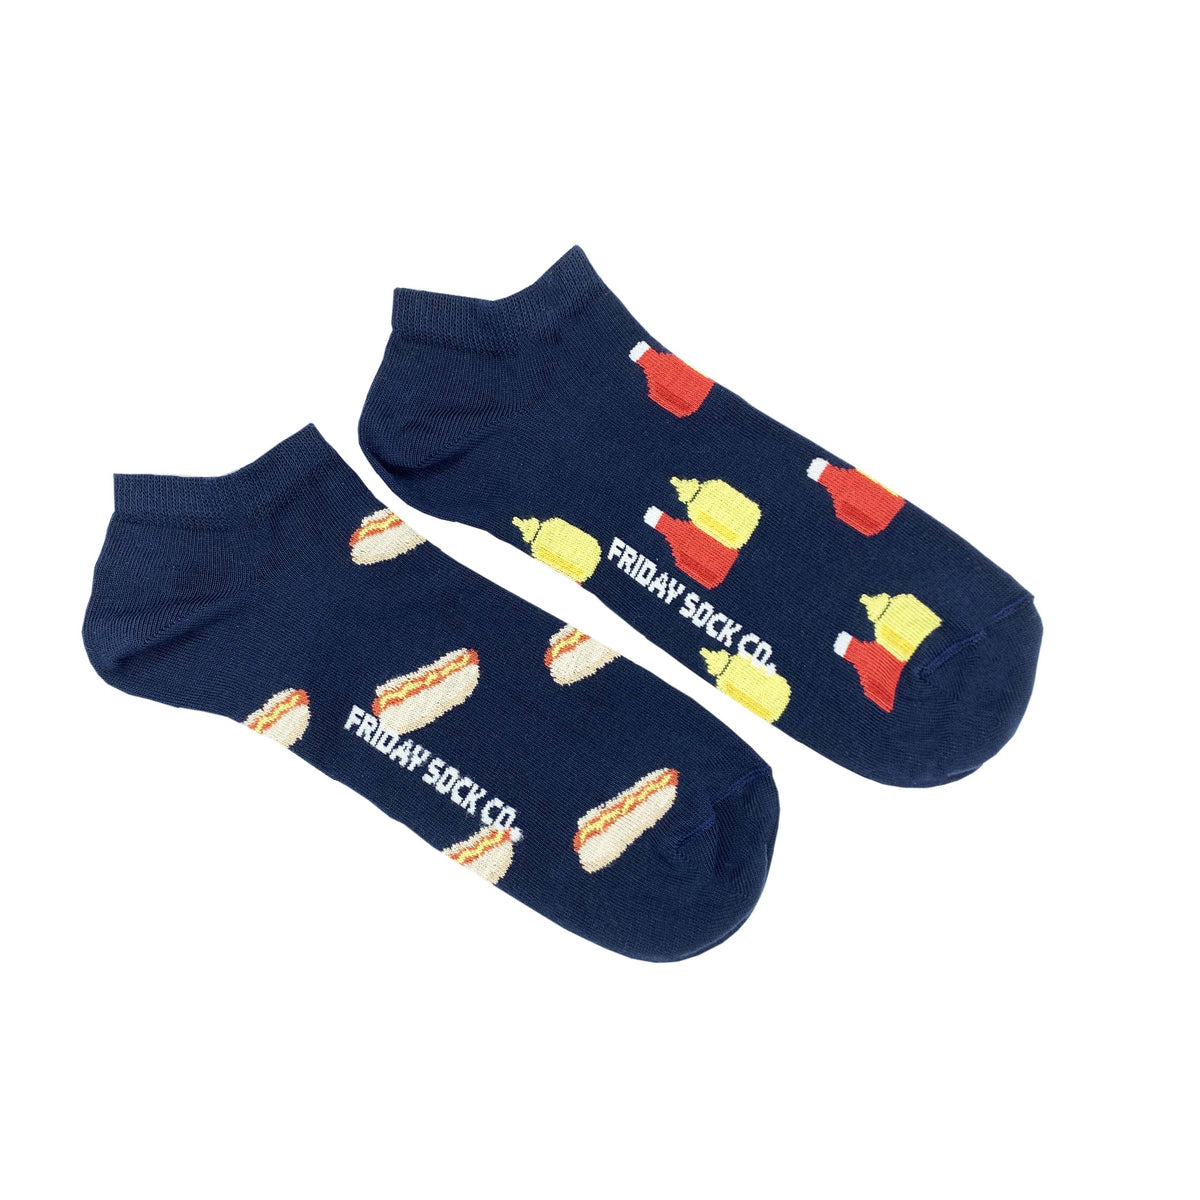 Friday Sock Co. - Ankle Socks Hotdog & Condiments